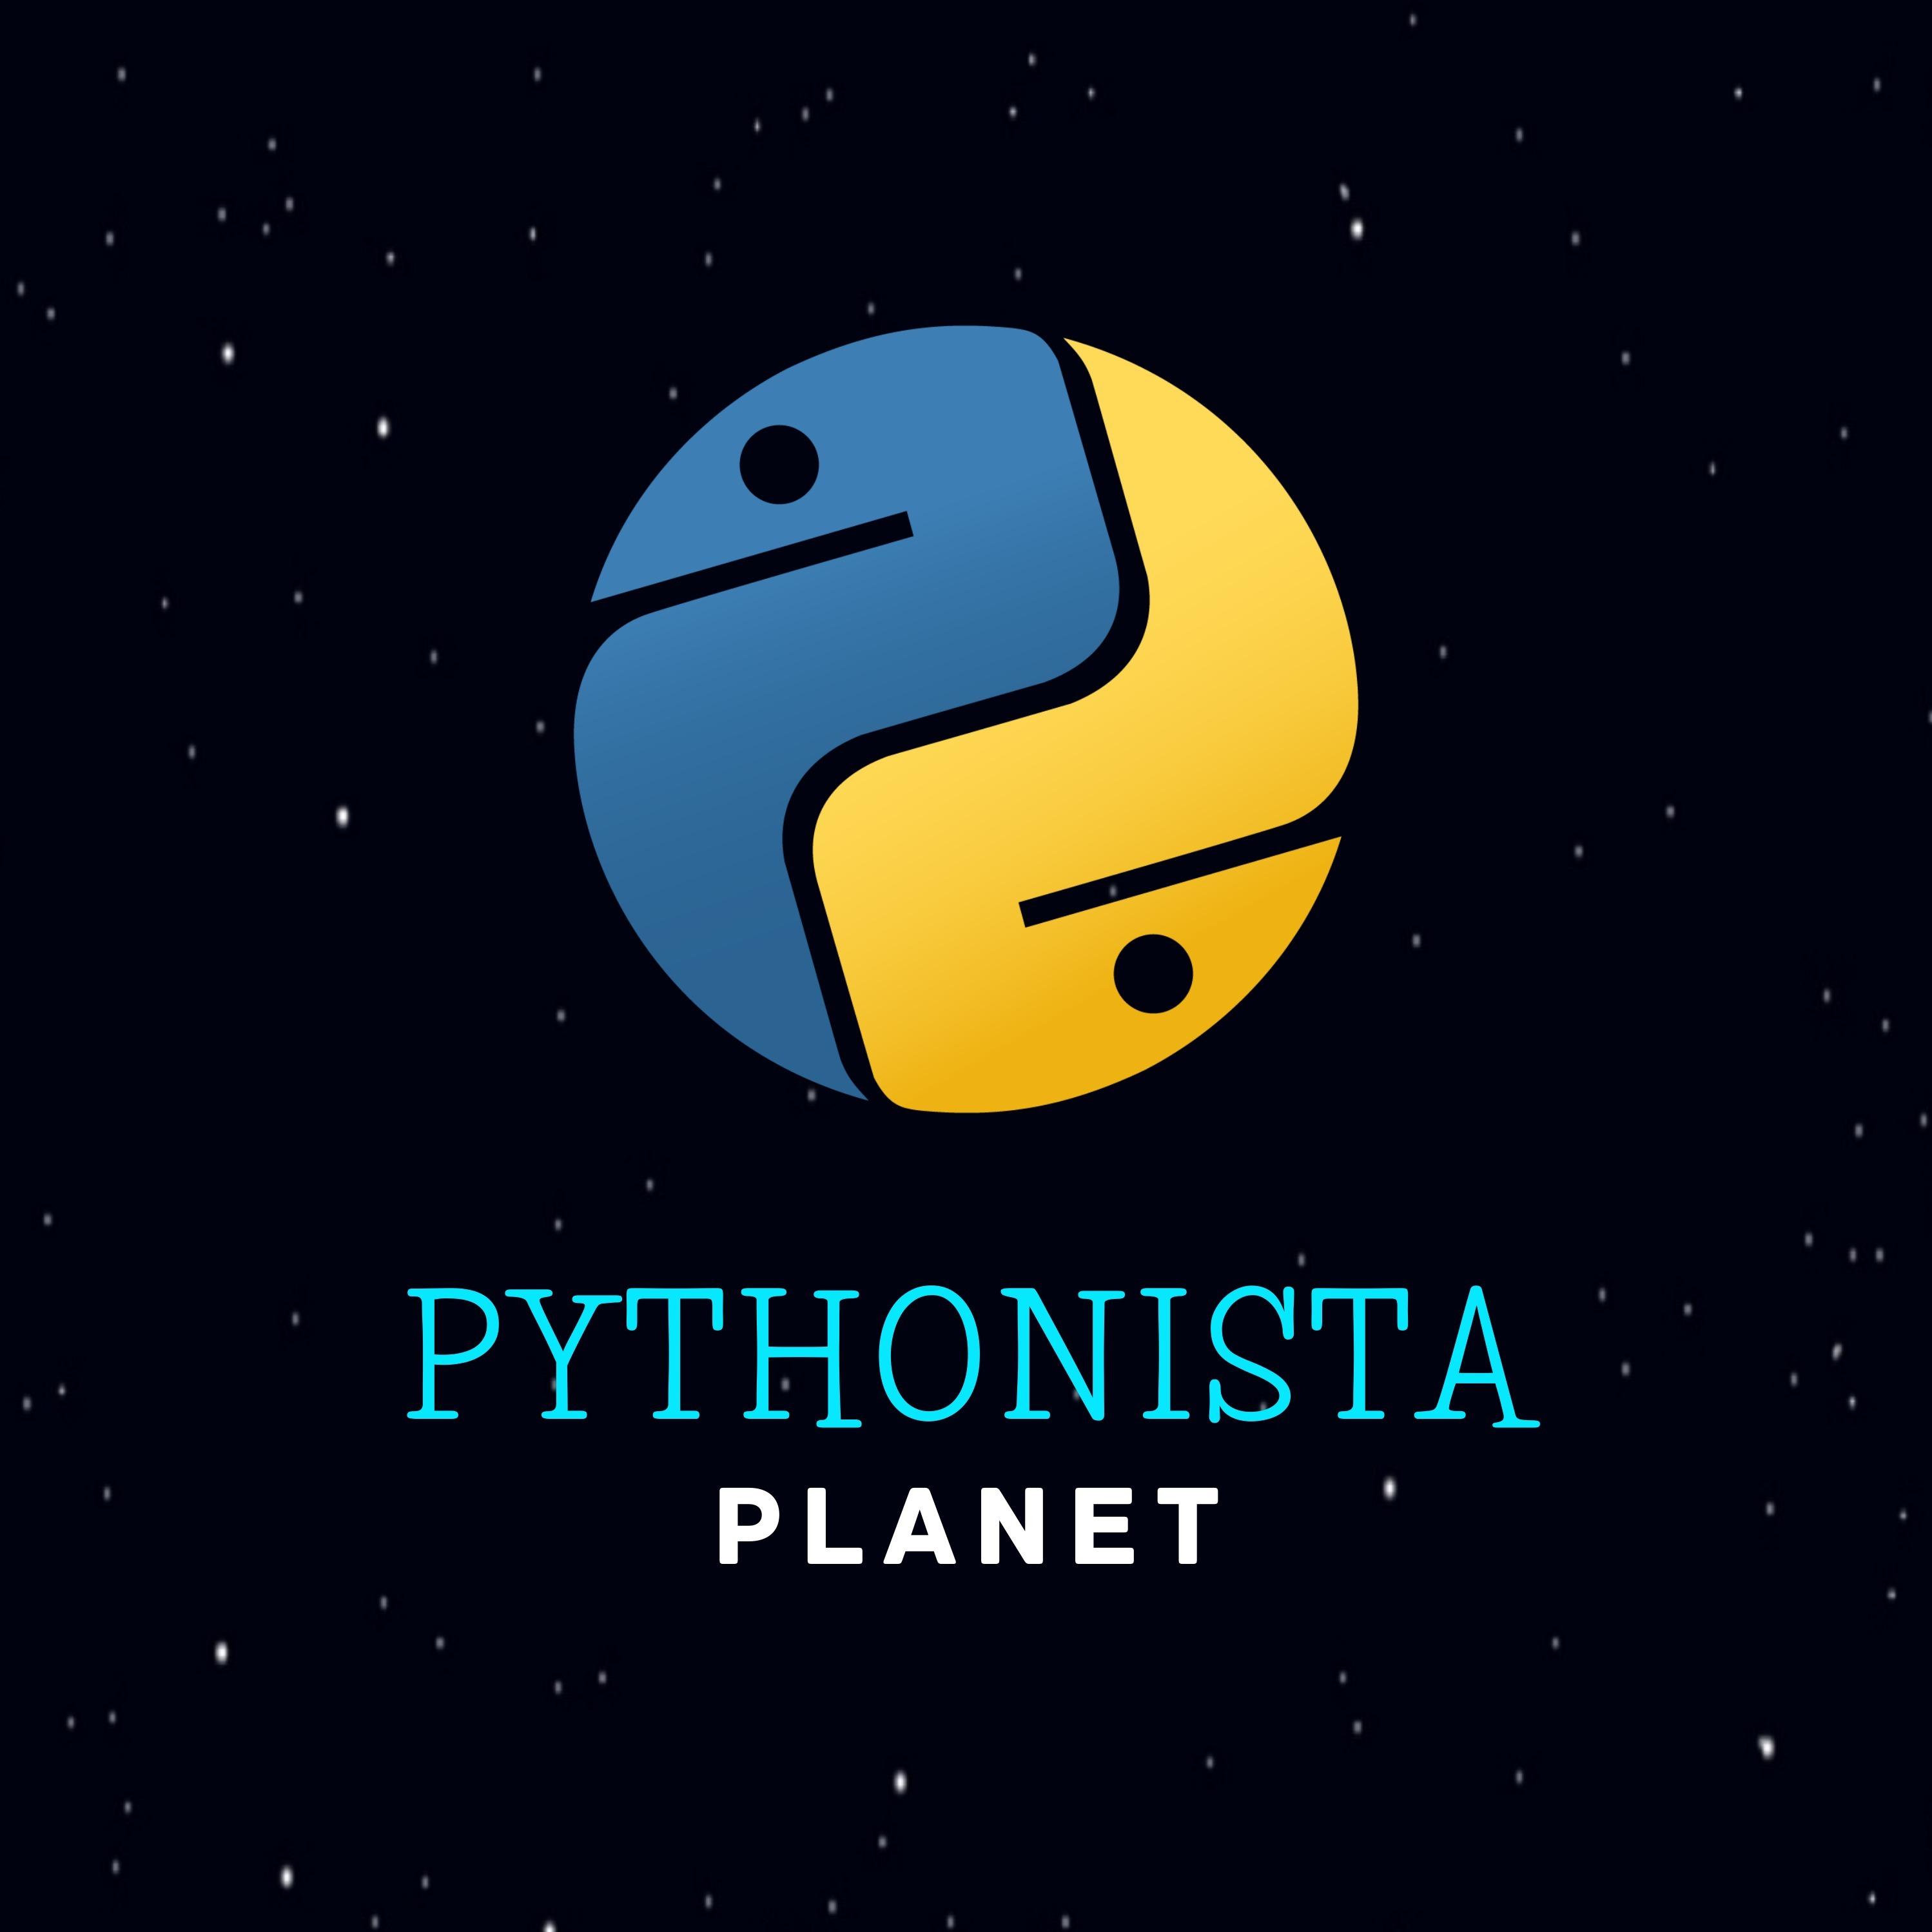 Pythonista Planet